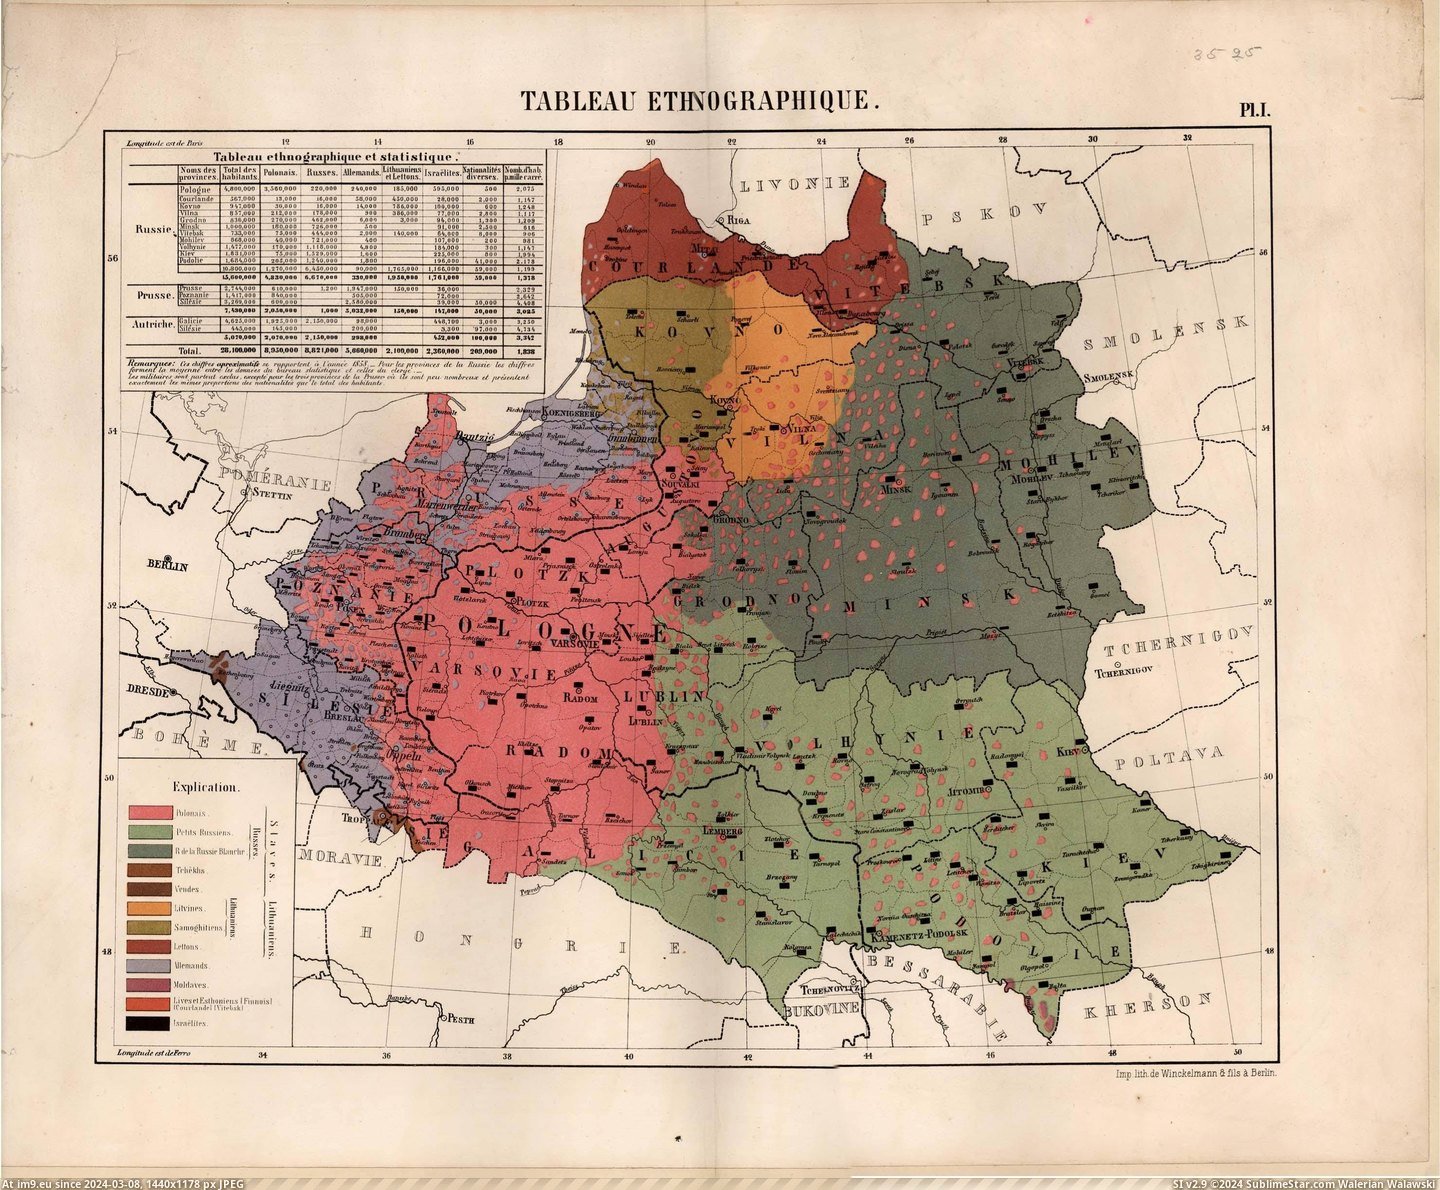 #Map #Poland #Partitioned #Statistics #Ethnographic [Mapporn] Ethnographic Map and Statistics of Partitioned Poland, 1858 [2959×2432] Pic. (Bild von album My r/MAPS favs))